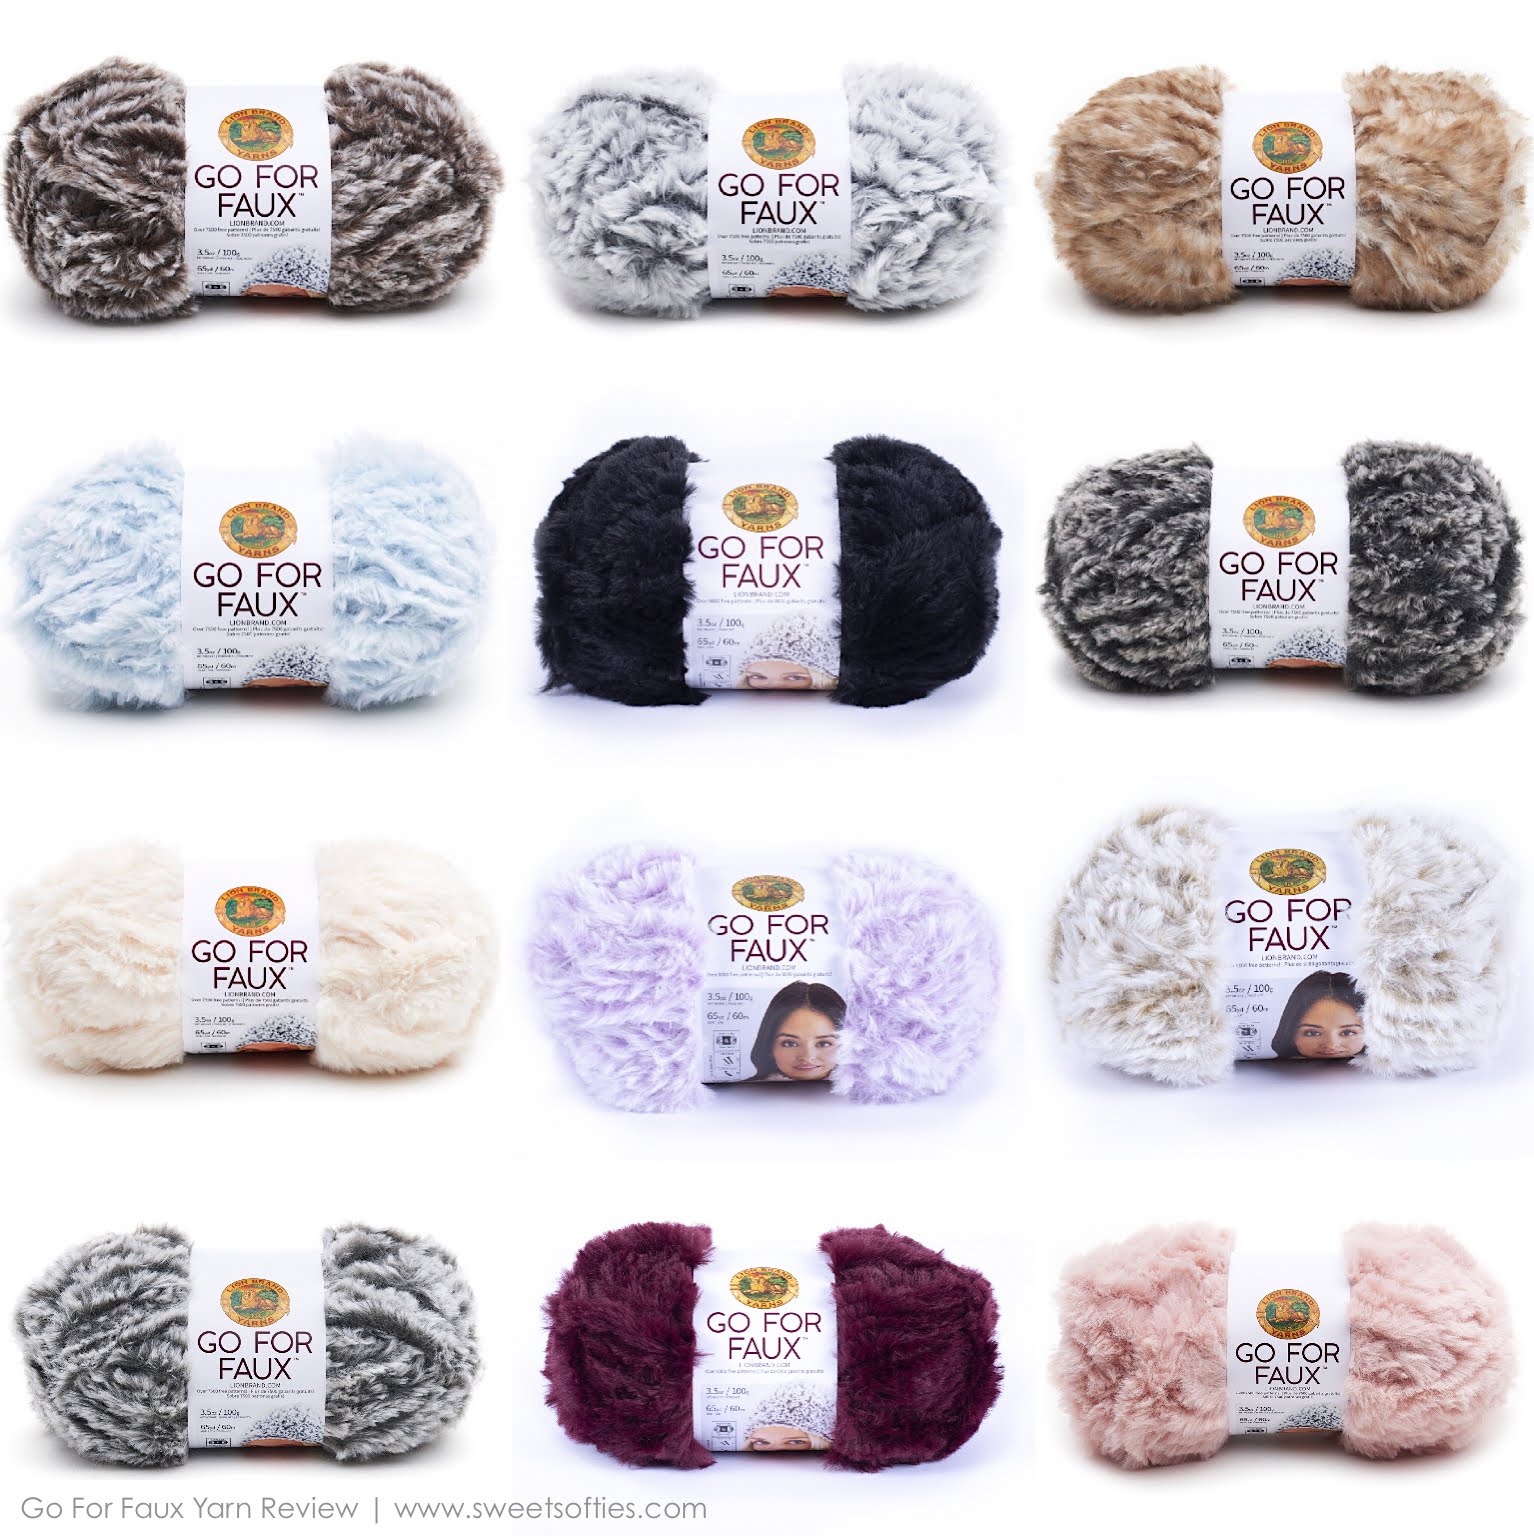 Free Crochet Patterns using Go For Faux Yarn - Sweet Softies